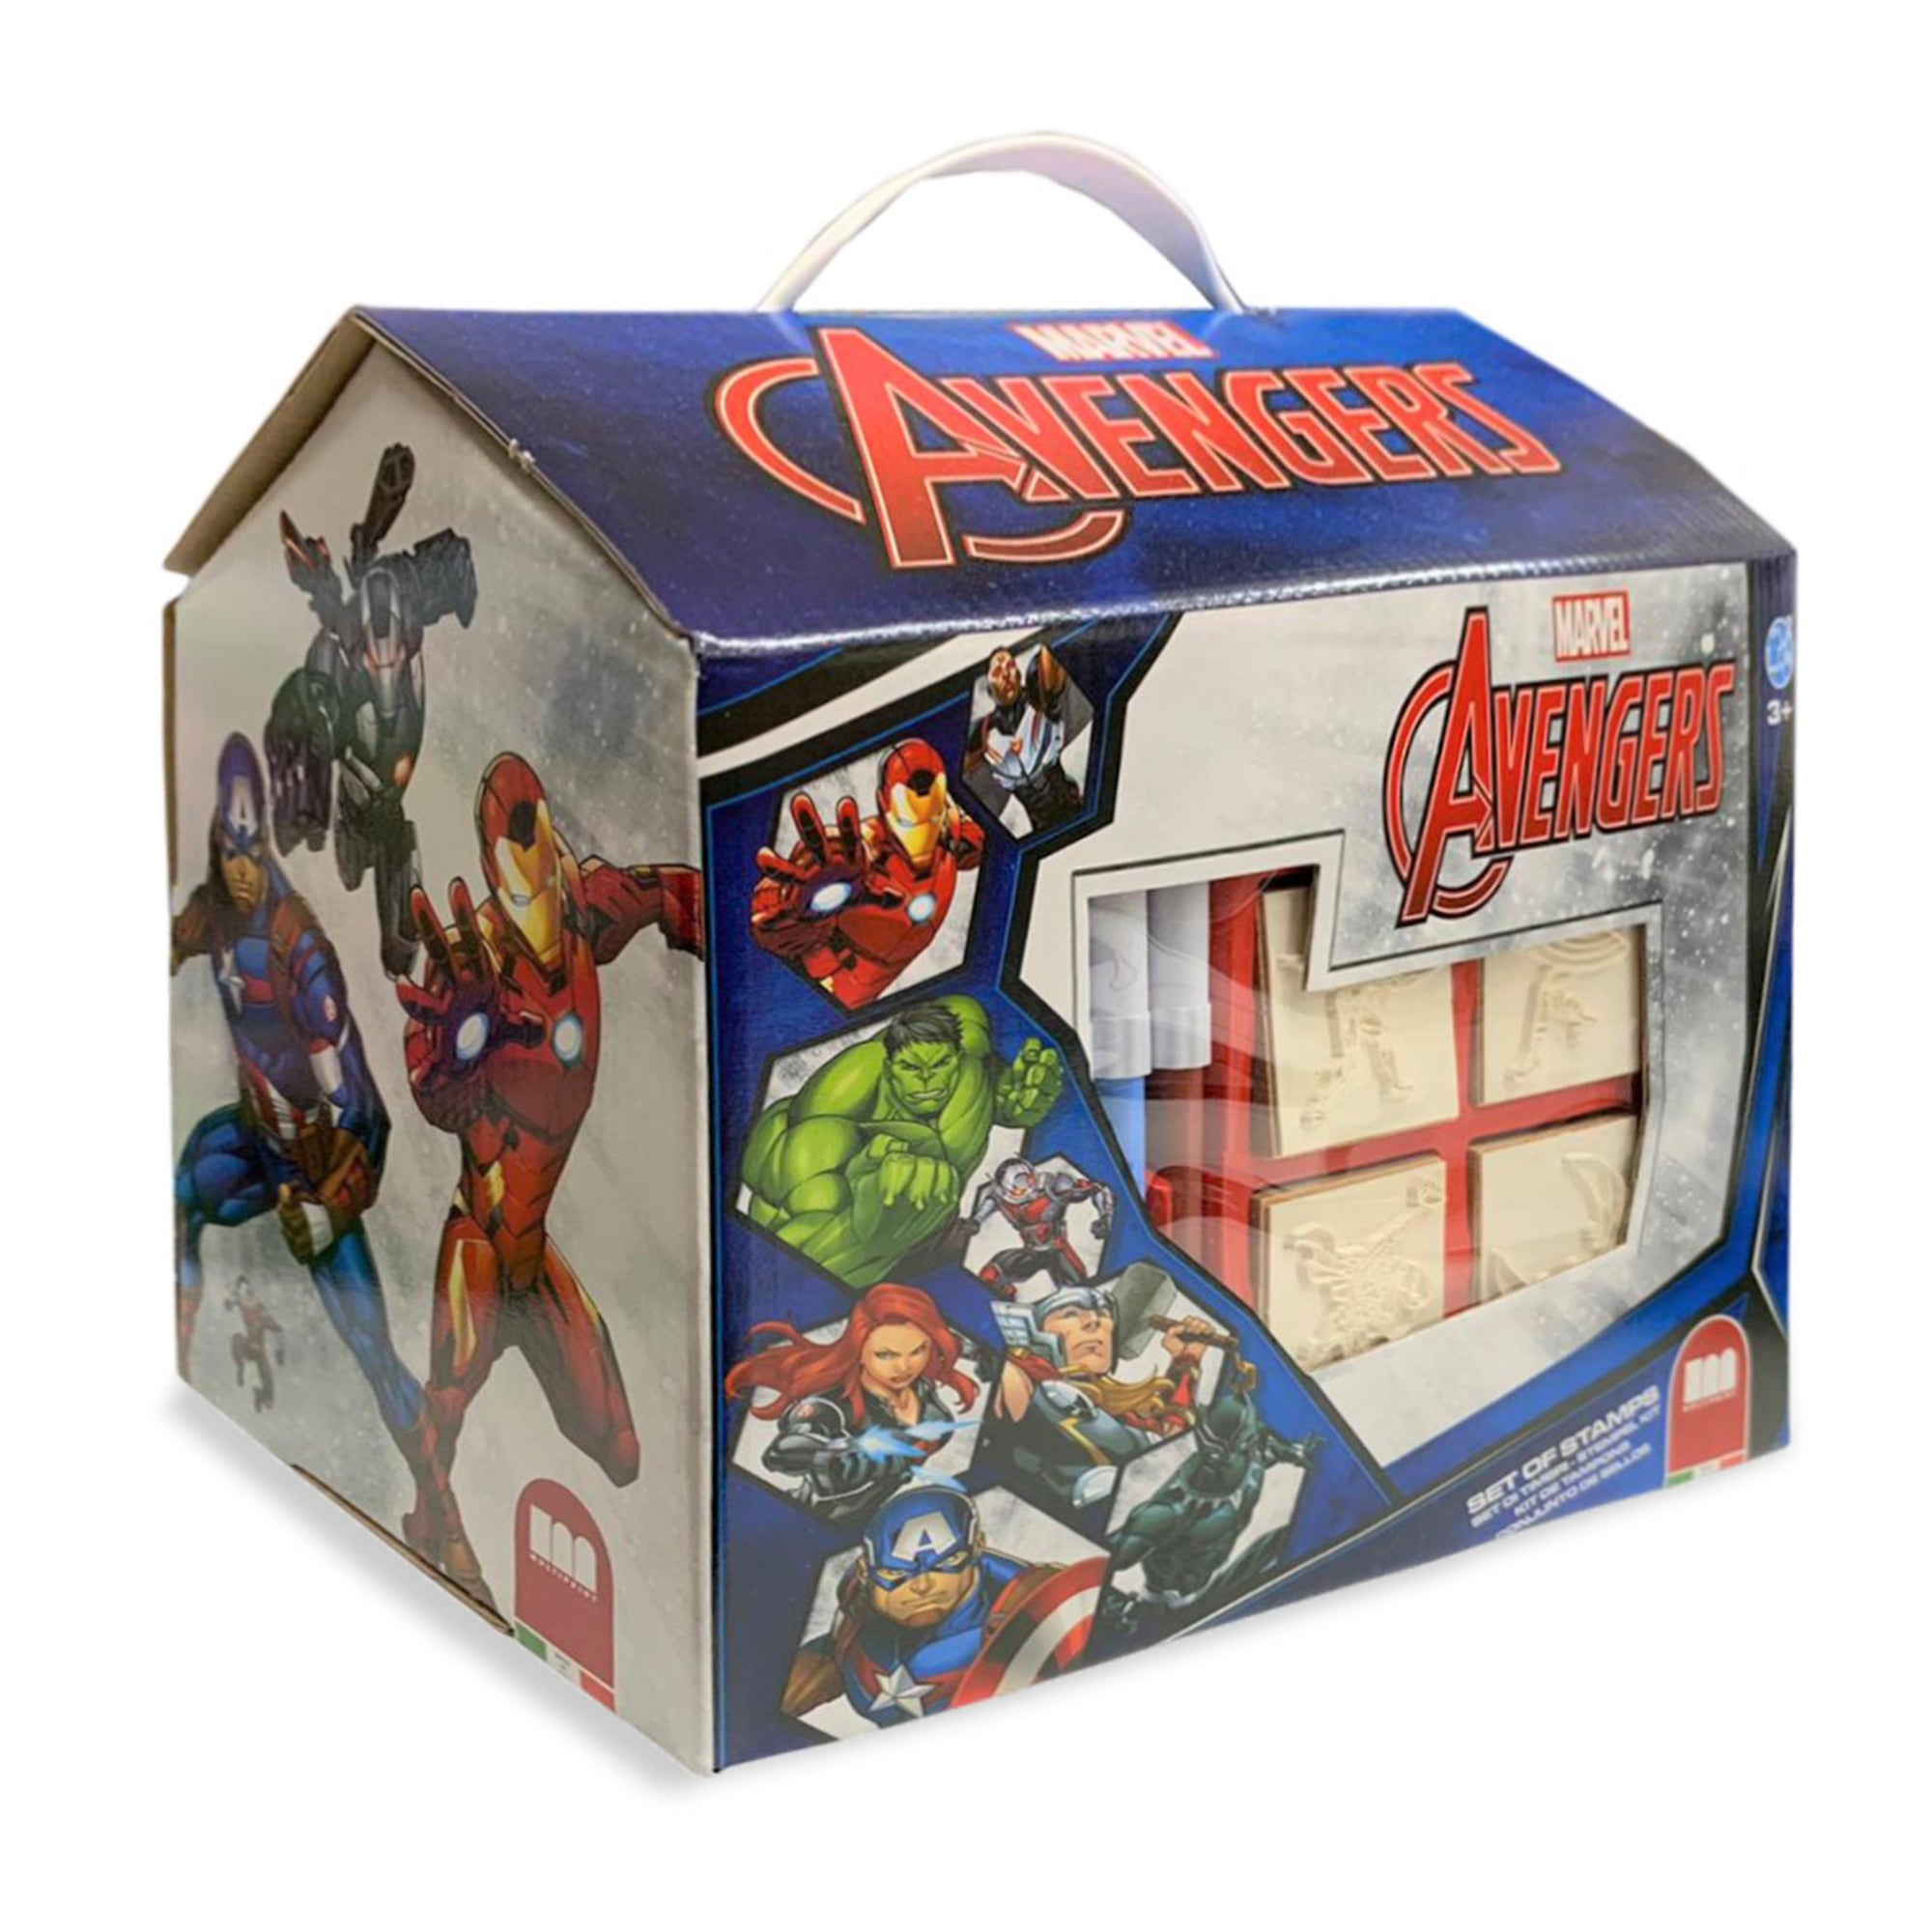 Set cancelleria casetta pennarelli Giotto bambini ufficiale Marvel Avengers 3353